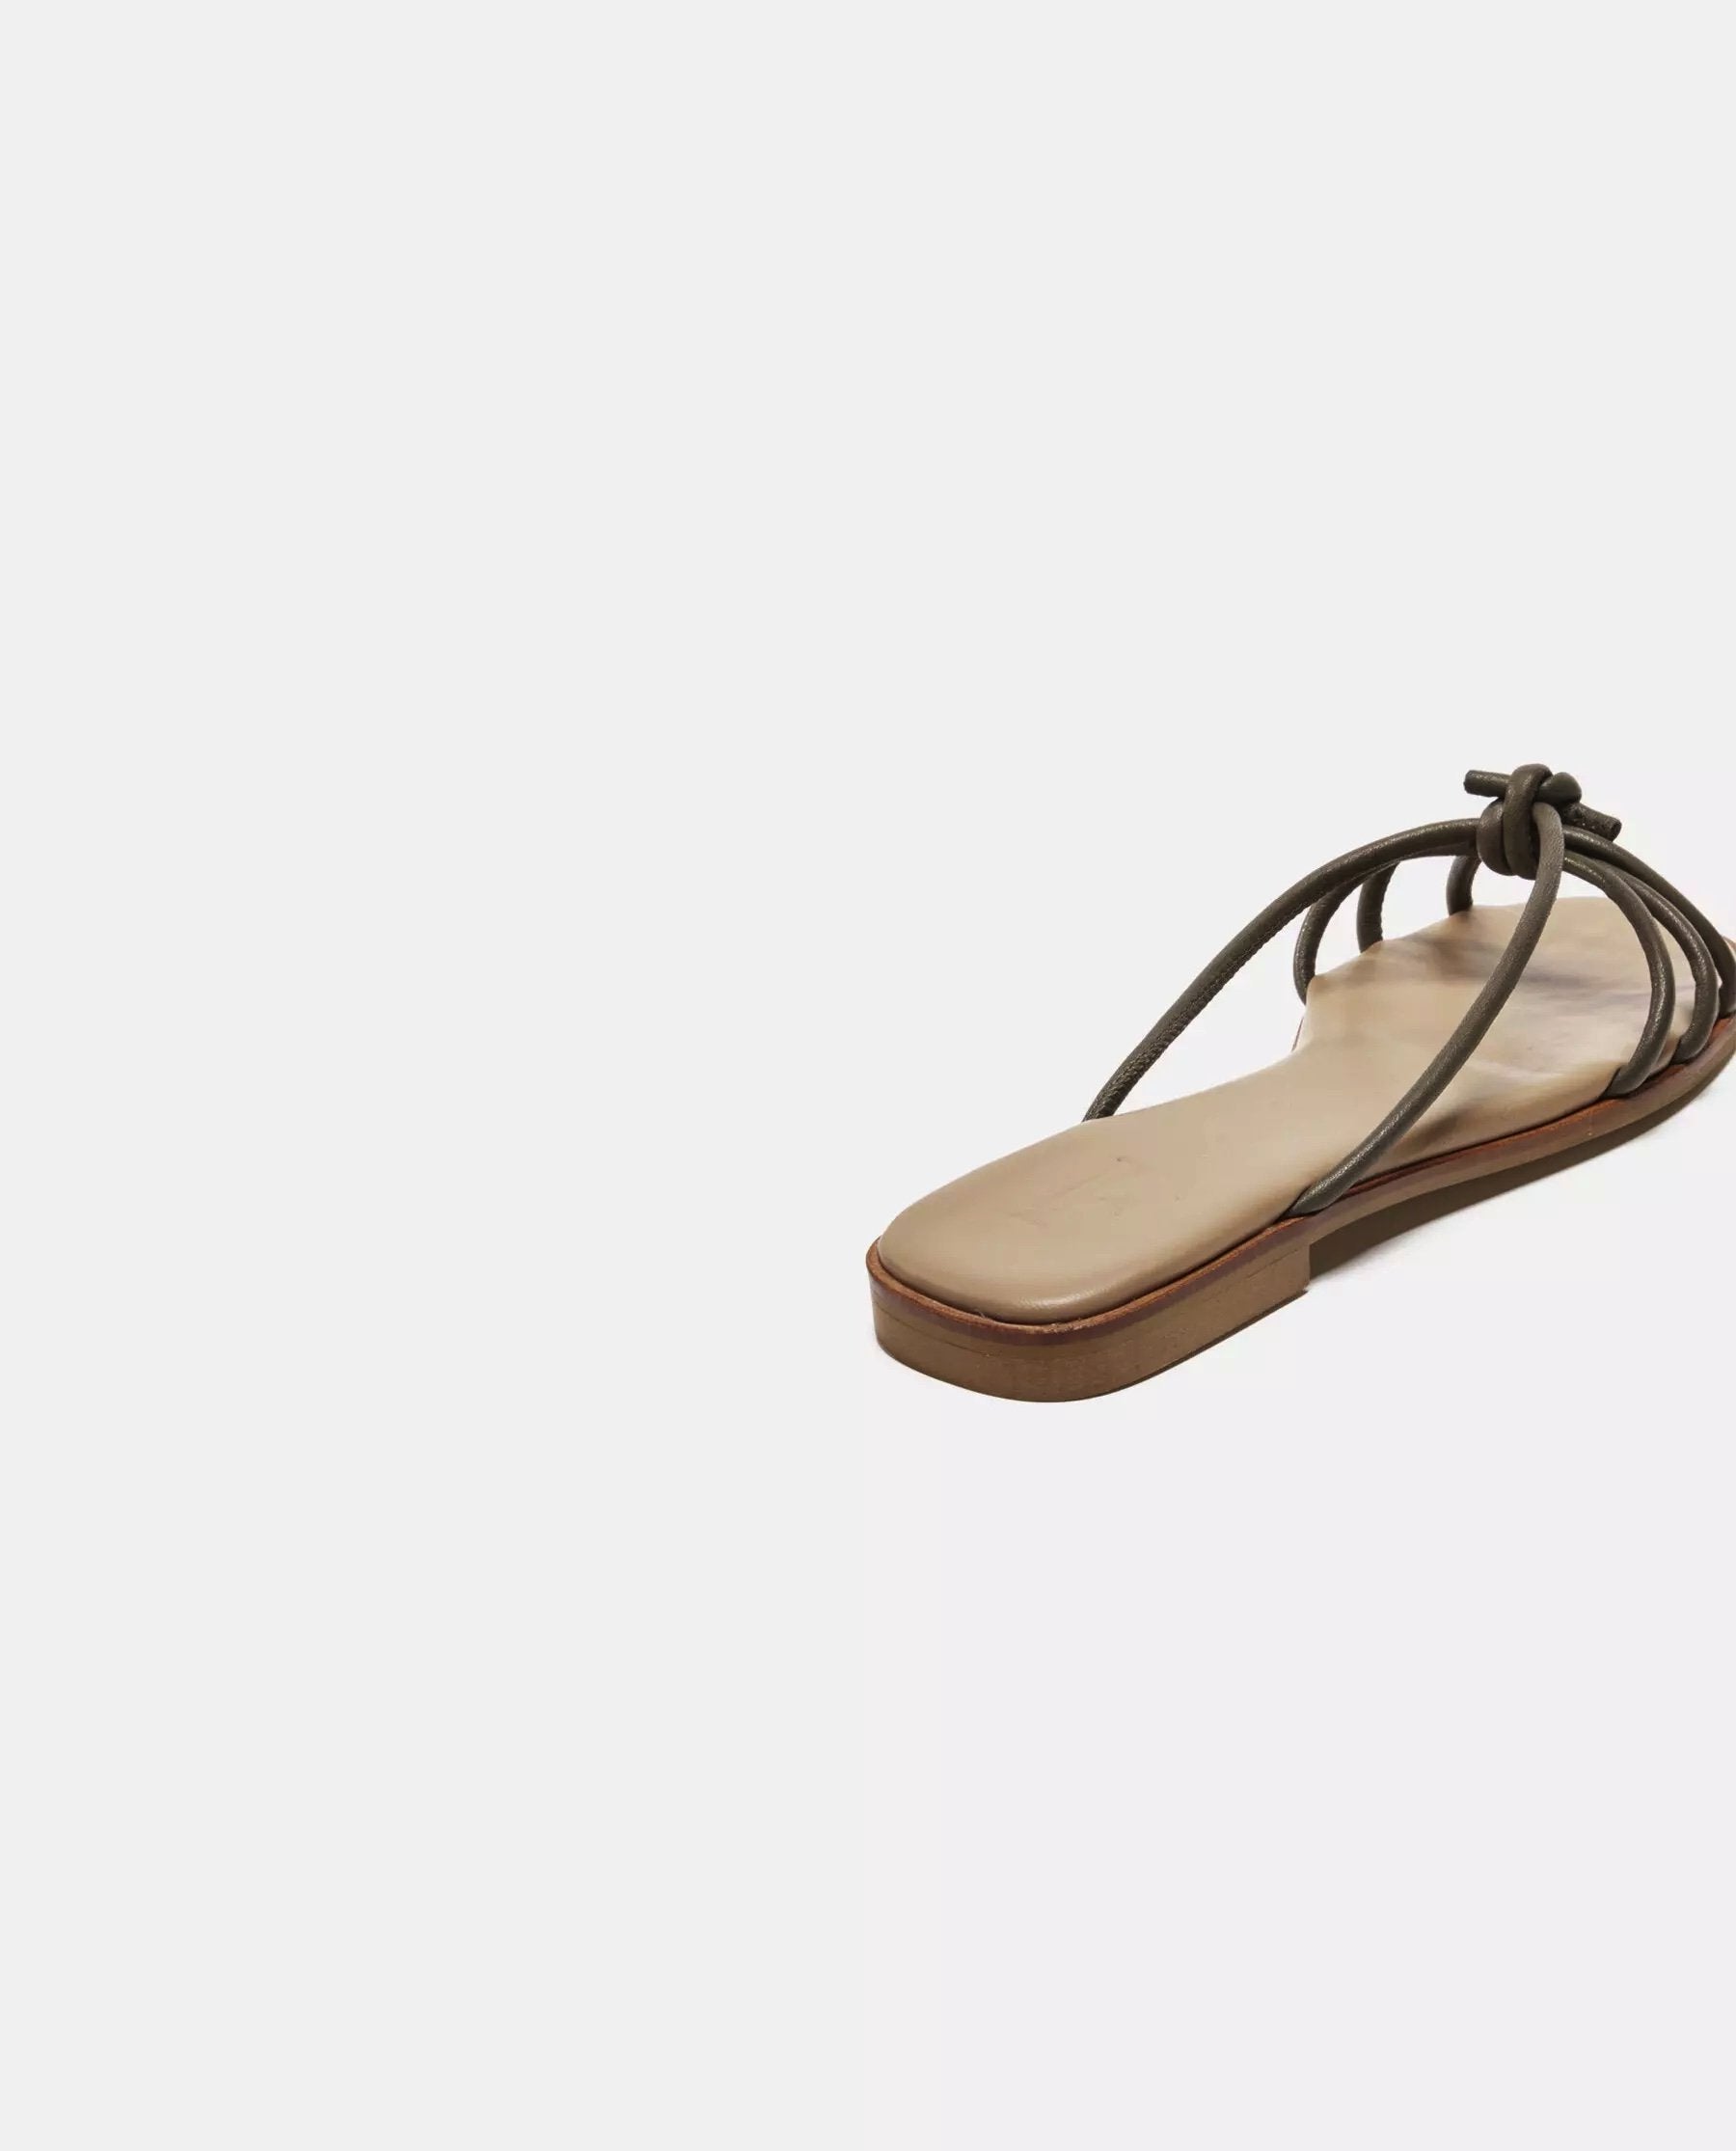 Yvette Leather Khaki Flat Sandals 21010700801-013 - 5